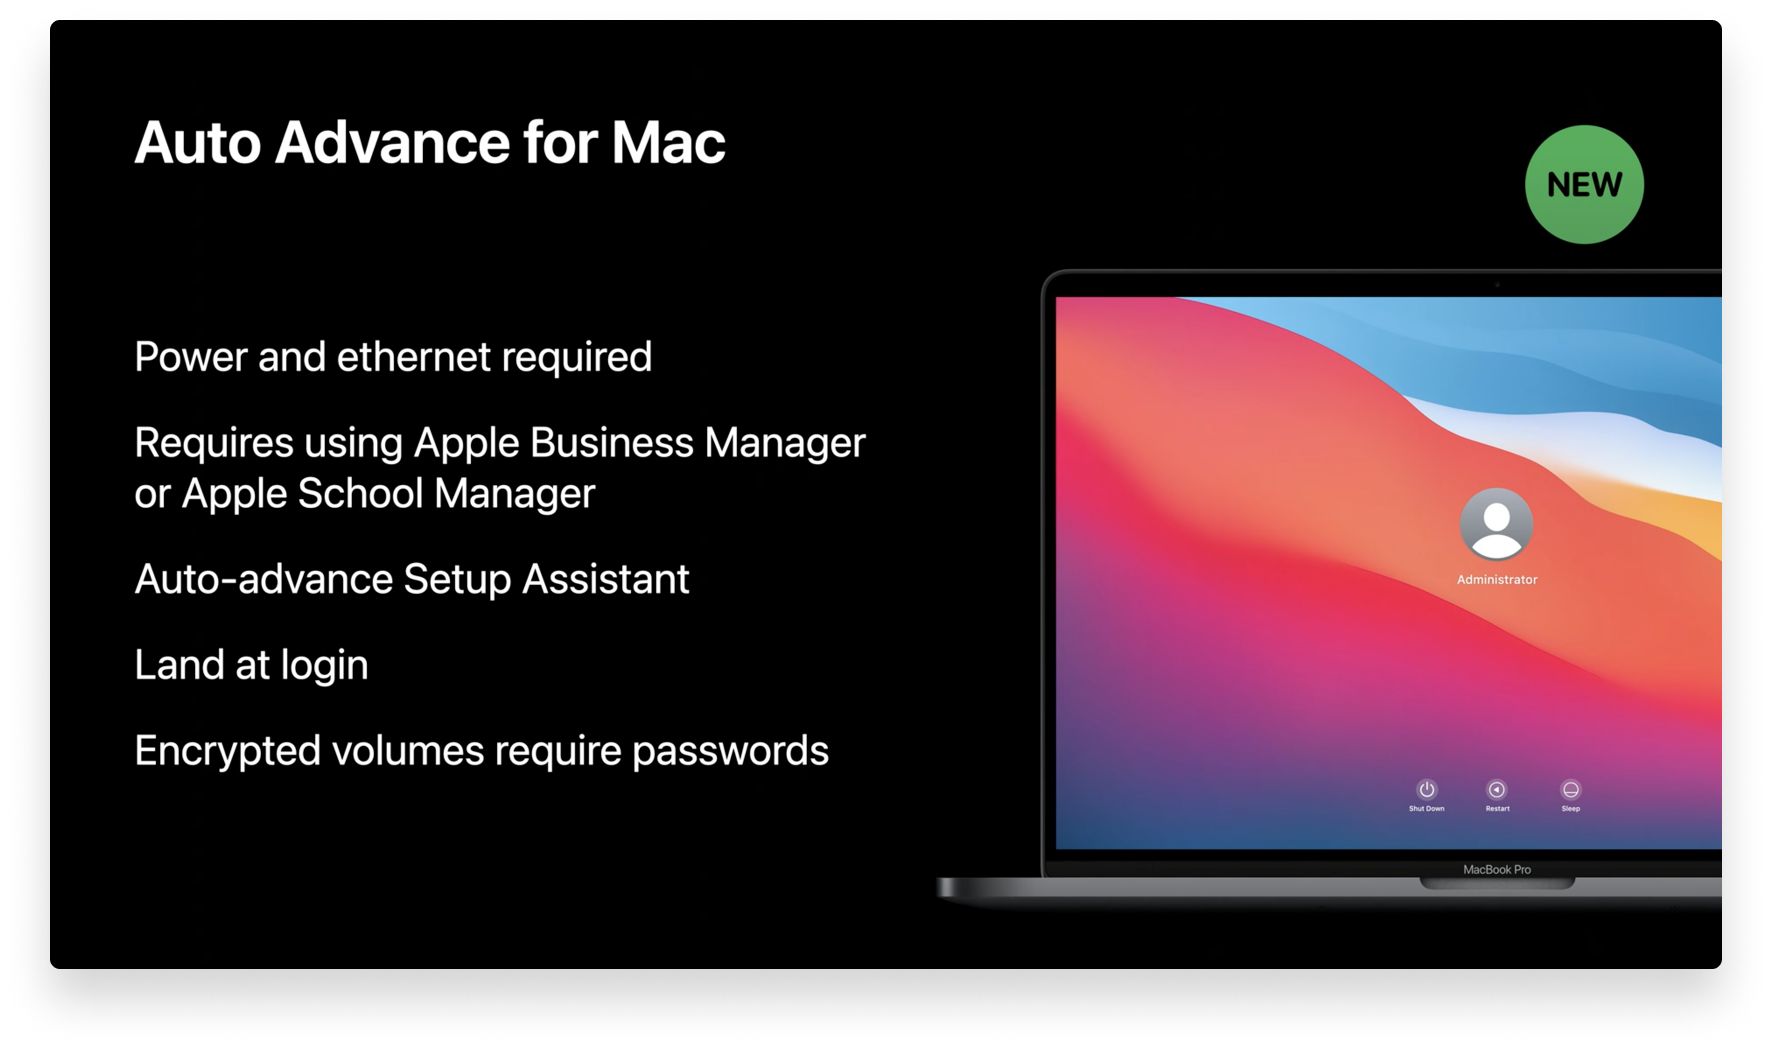 slide advancer for mac